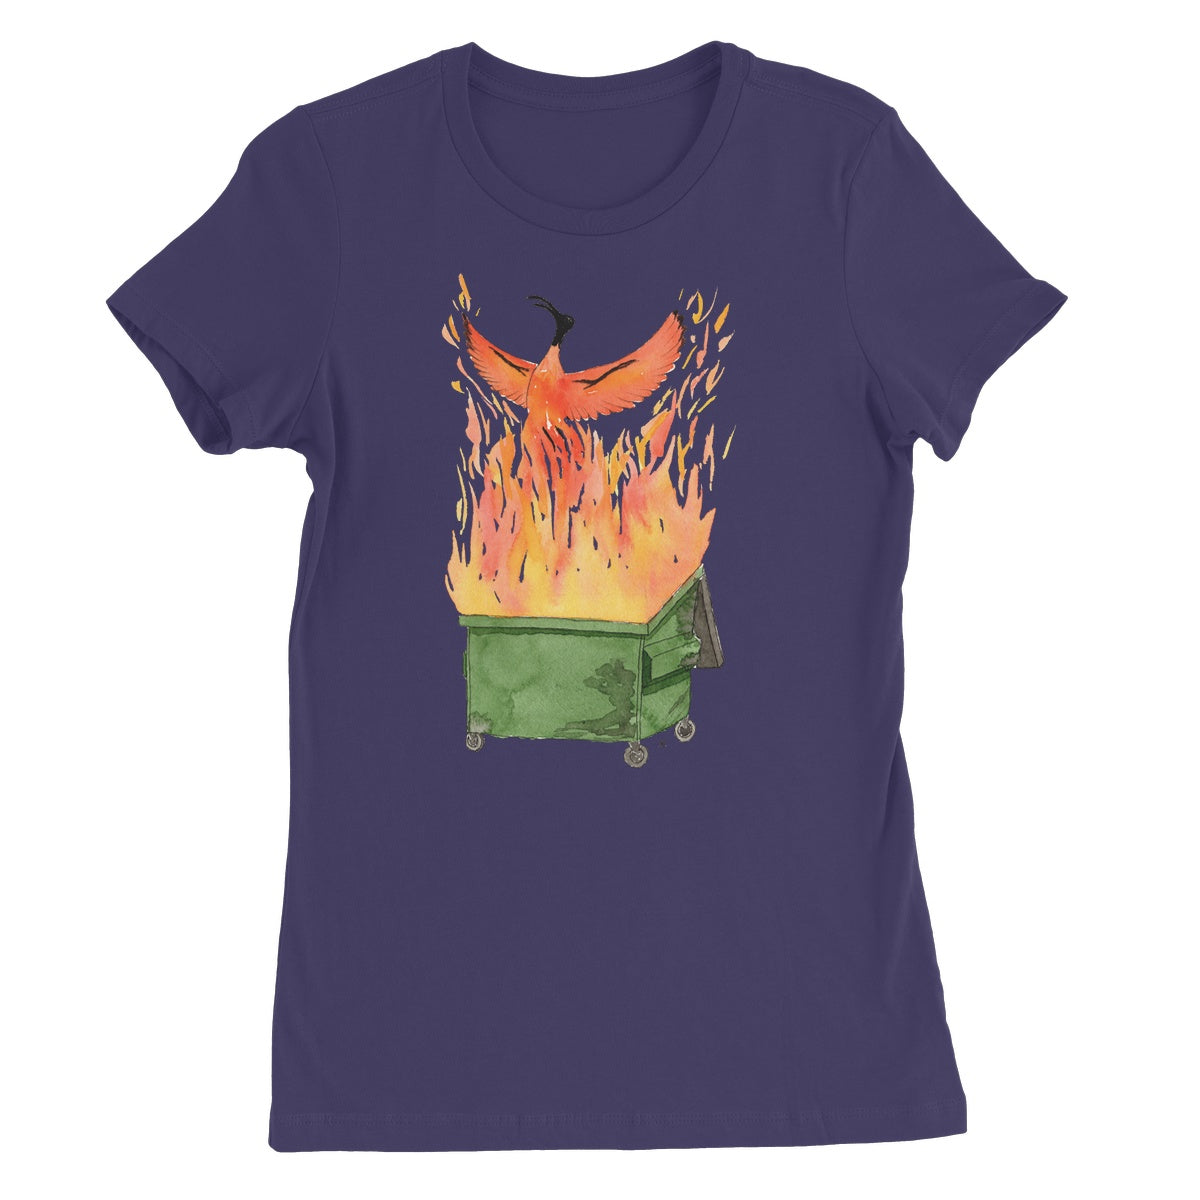 Bin Phoenix Women's T-Shirt